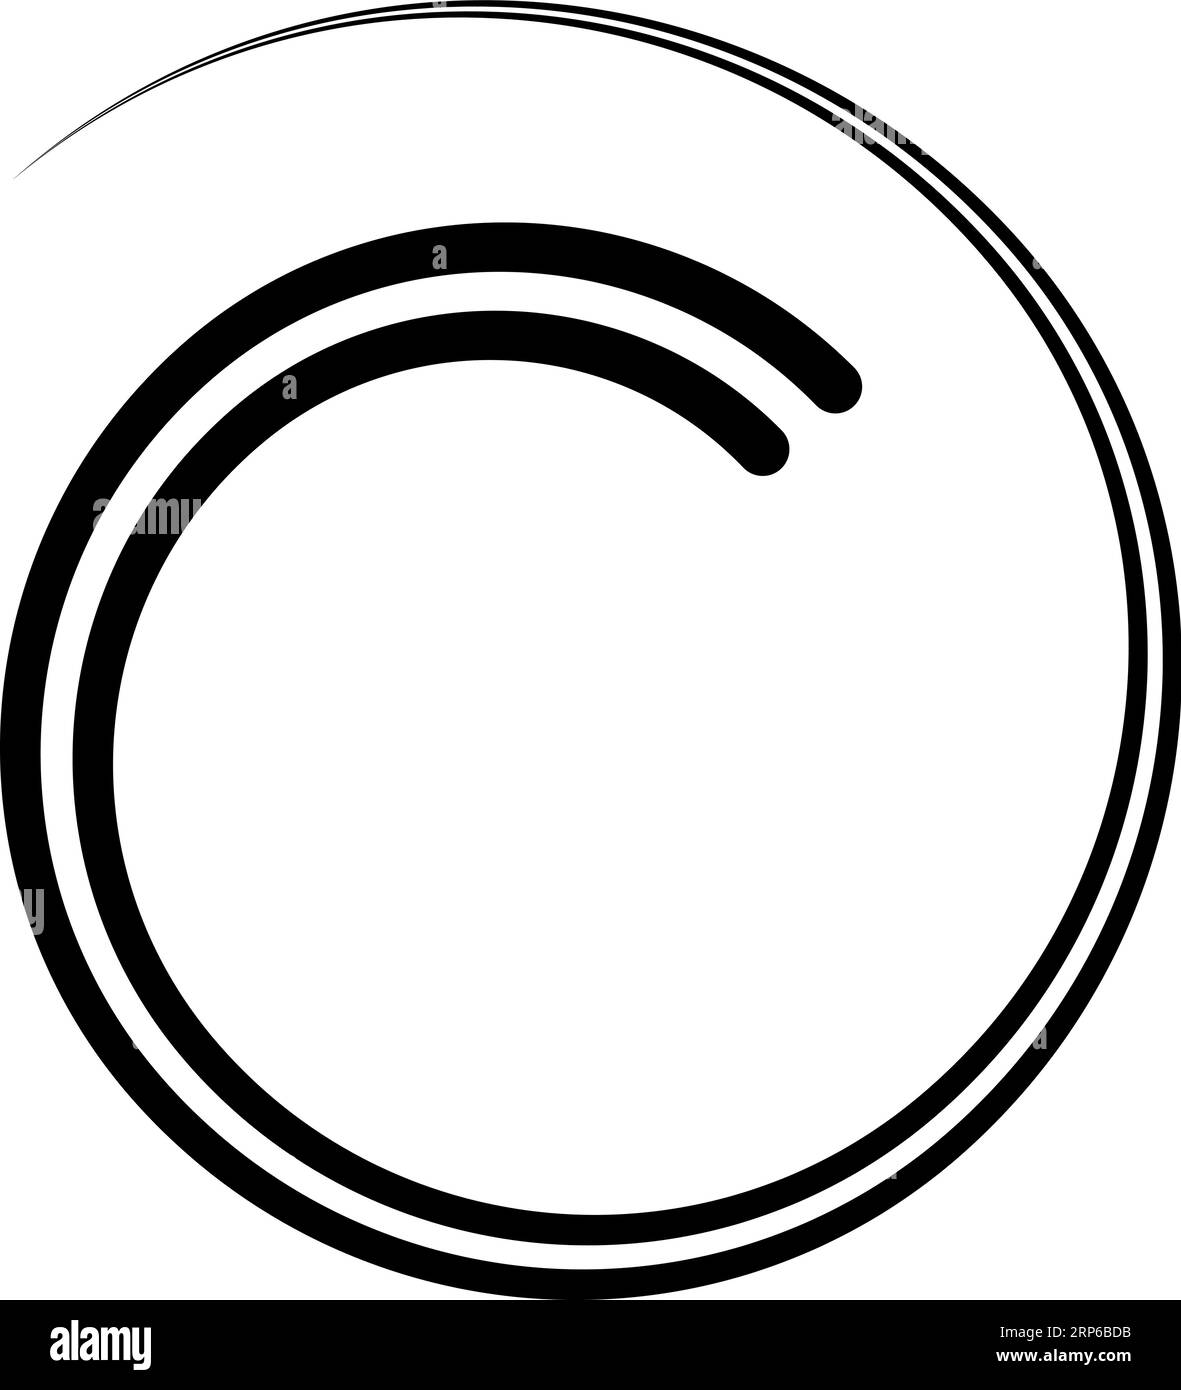 Doppelte runde Spirale Logo Vorlage Stock Illustration Stock Vektor